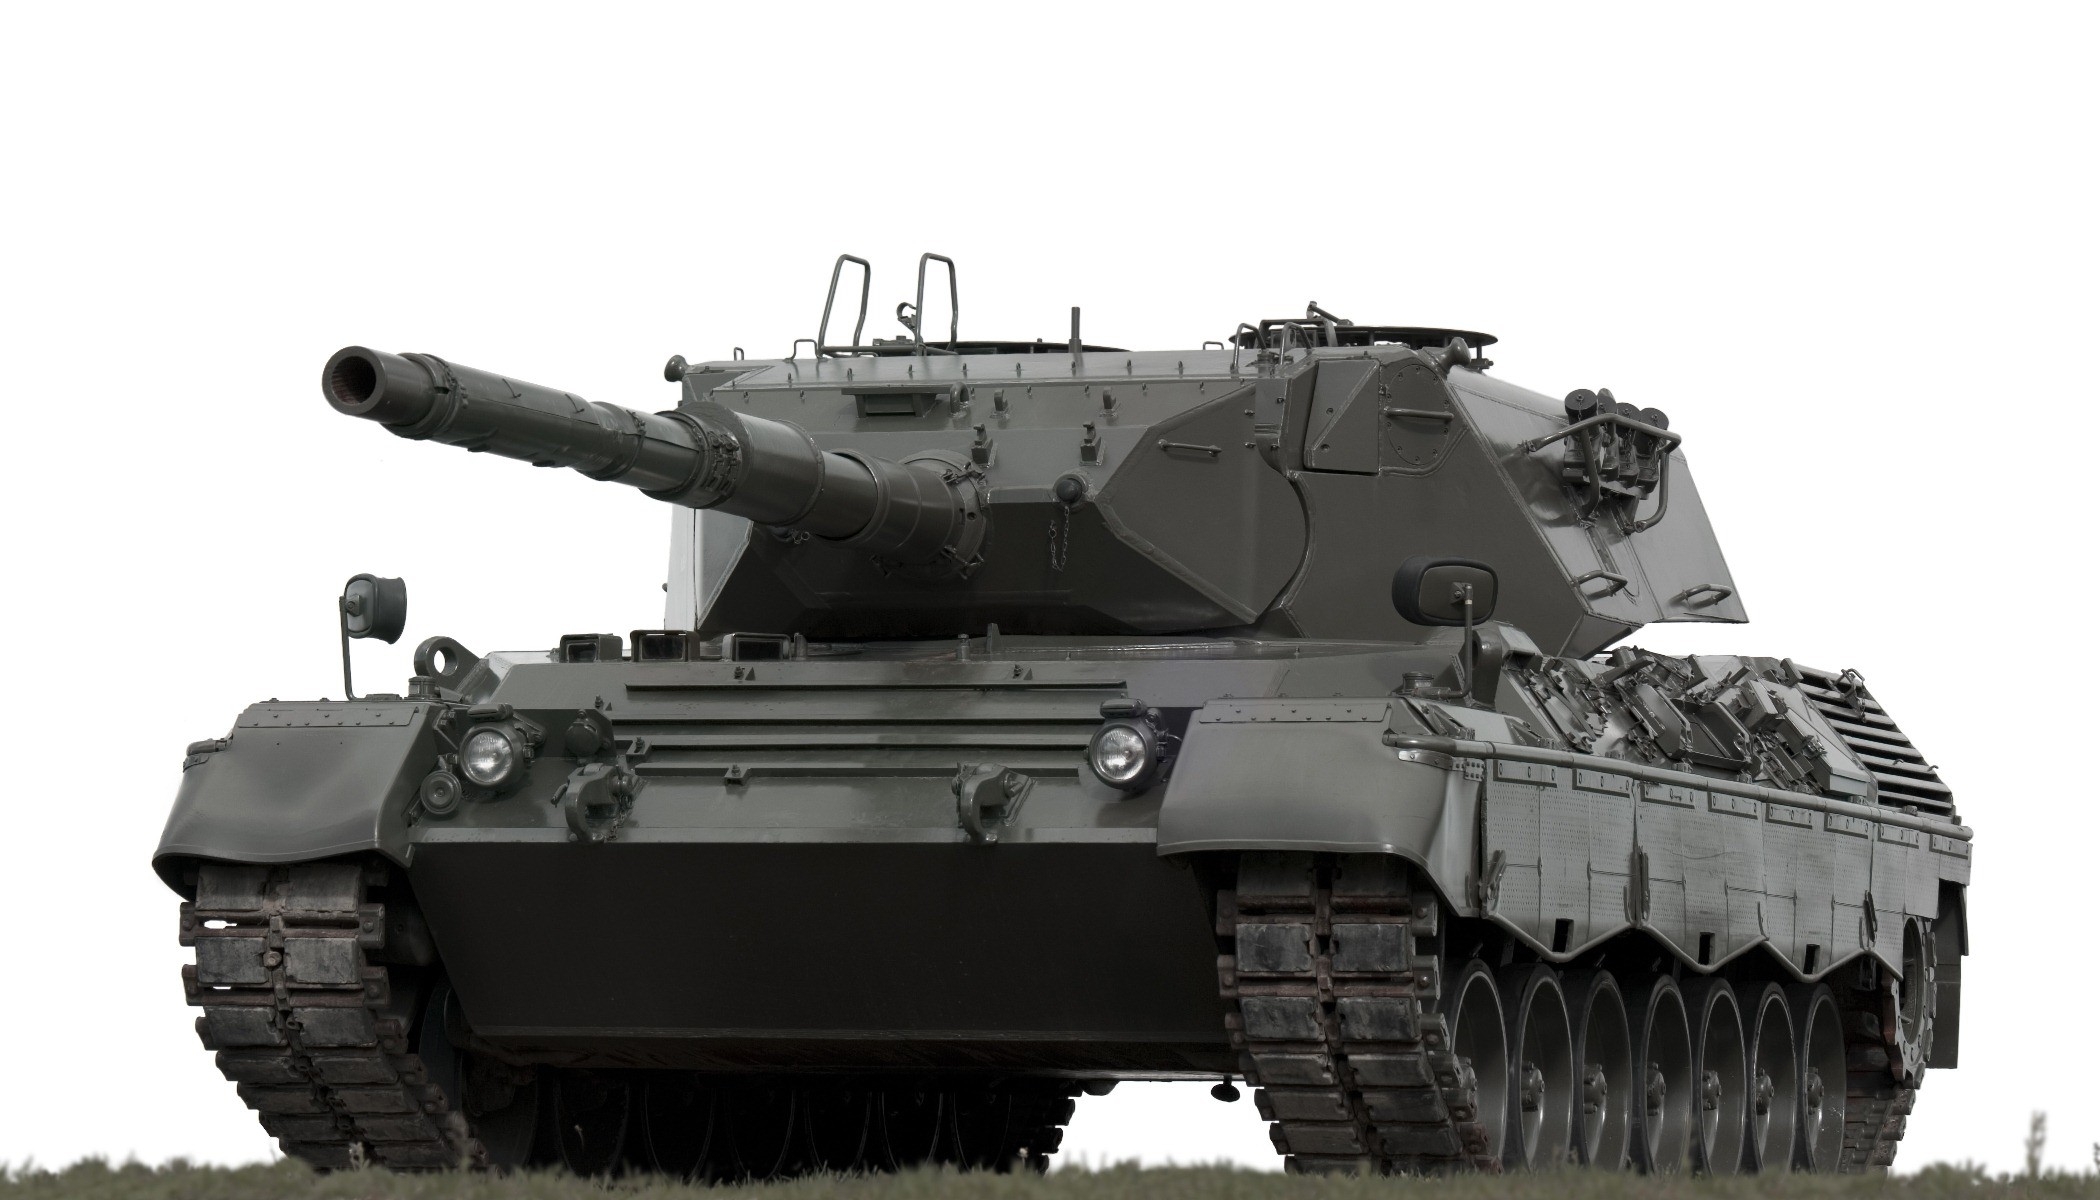 tanks leopard 1 main battle tank 2100x1200 wallpaper High Quality Wallpaper, High Definition Wallpaper